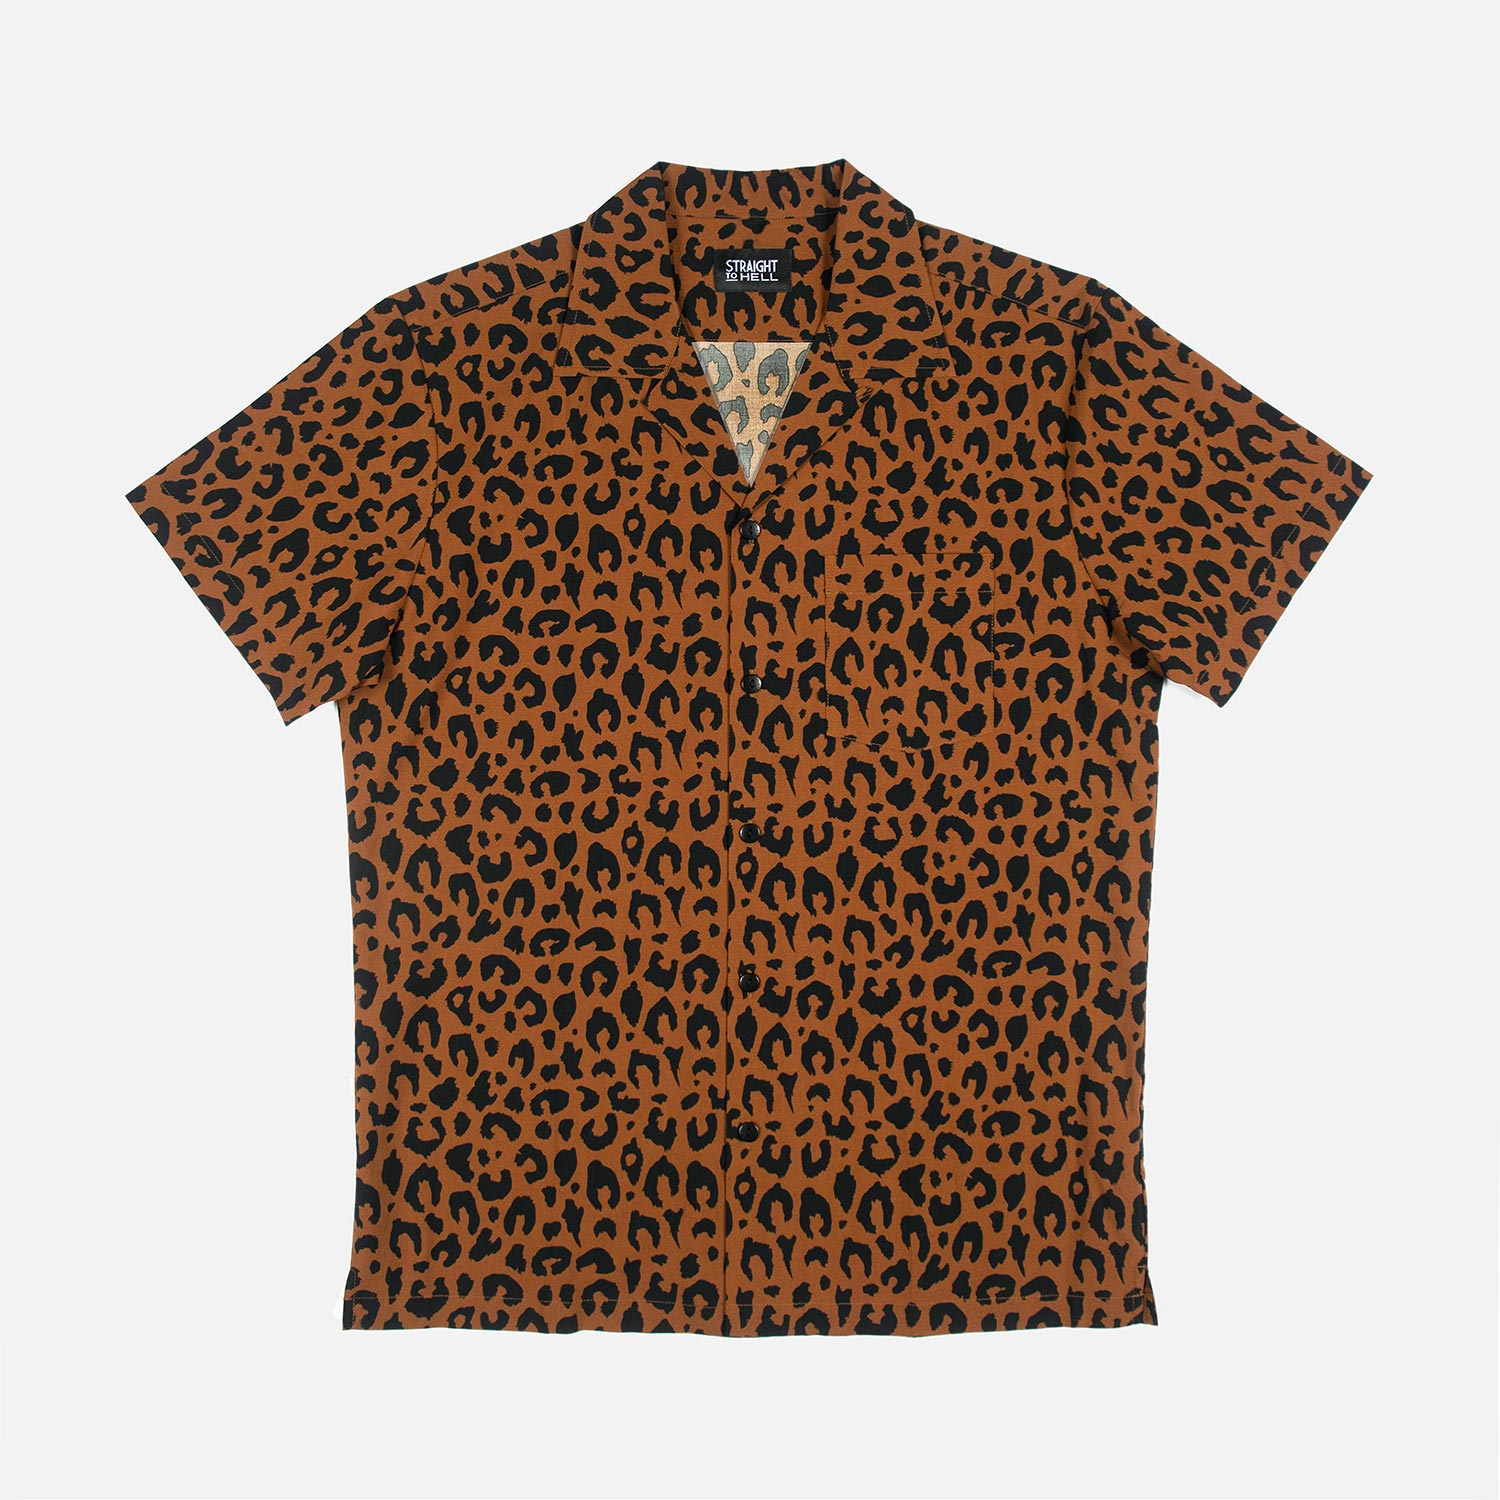 Boss Leopard - Brown and Black Leopard Print Shirt (Size S, M